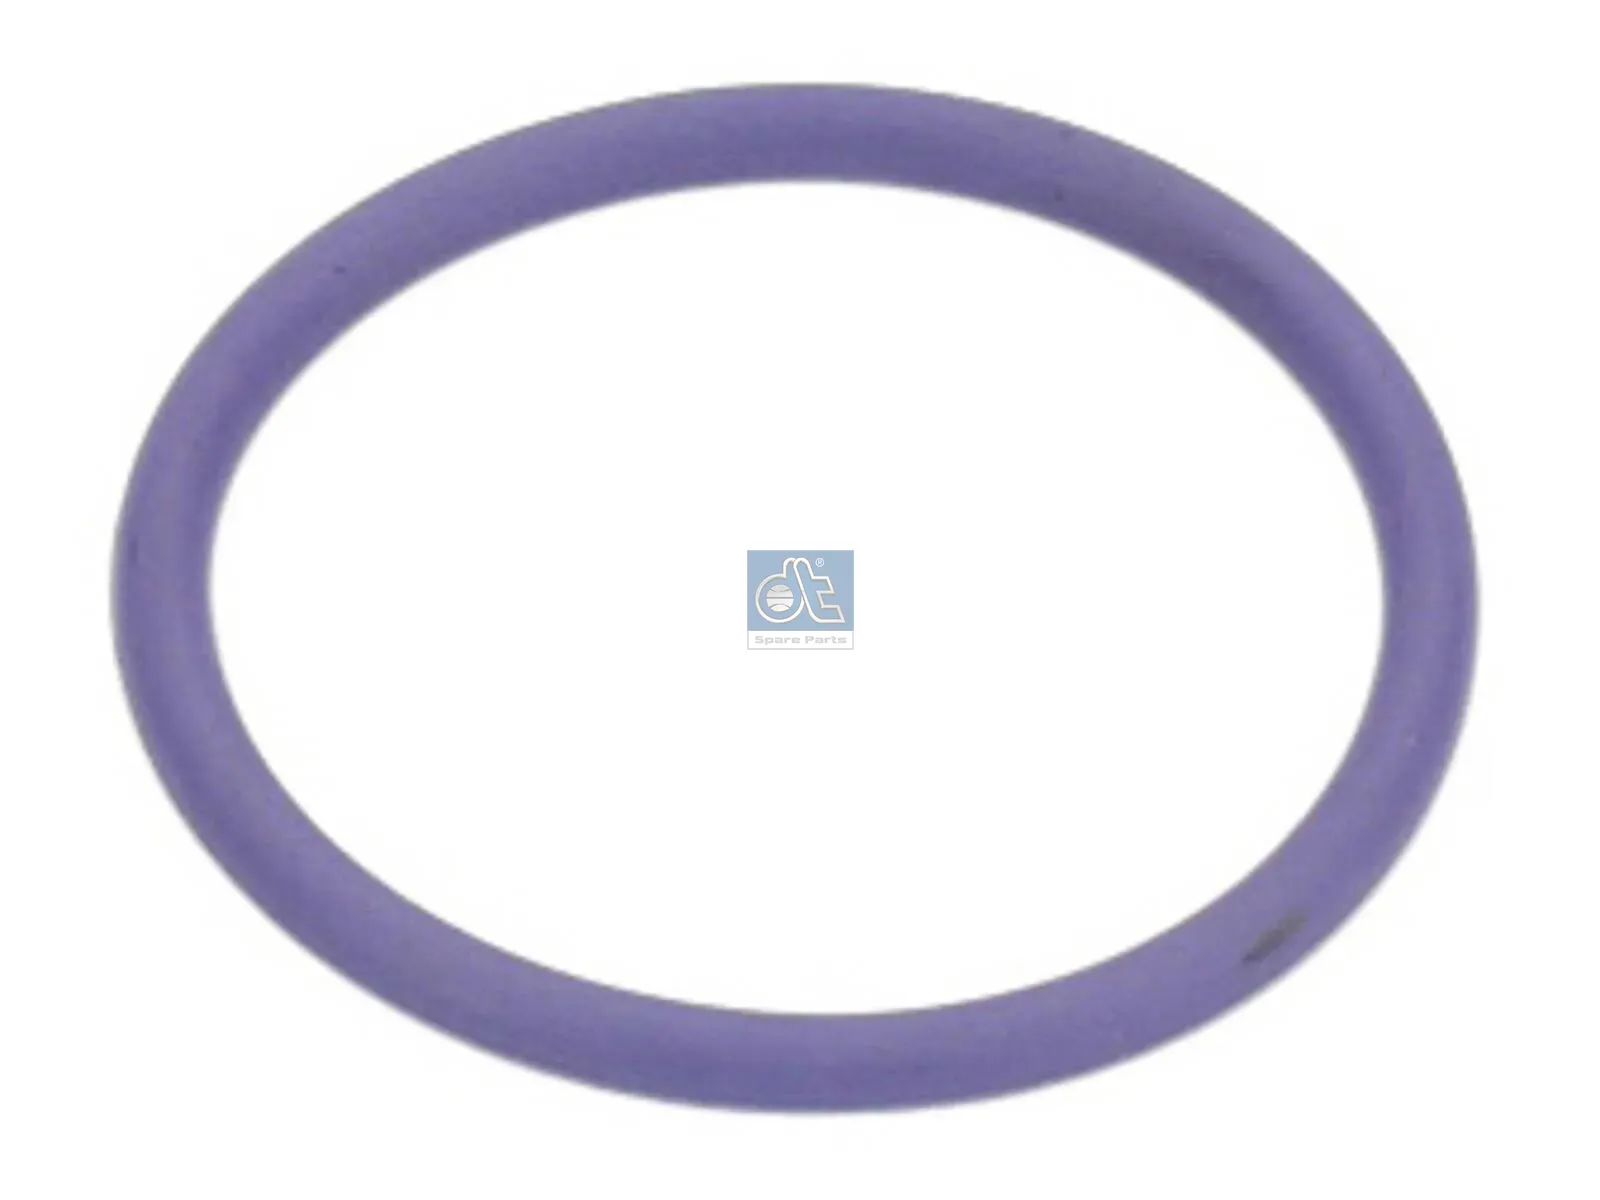 O-ring, purple